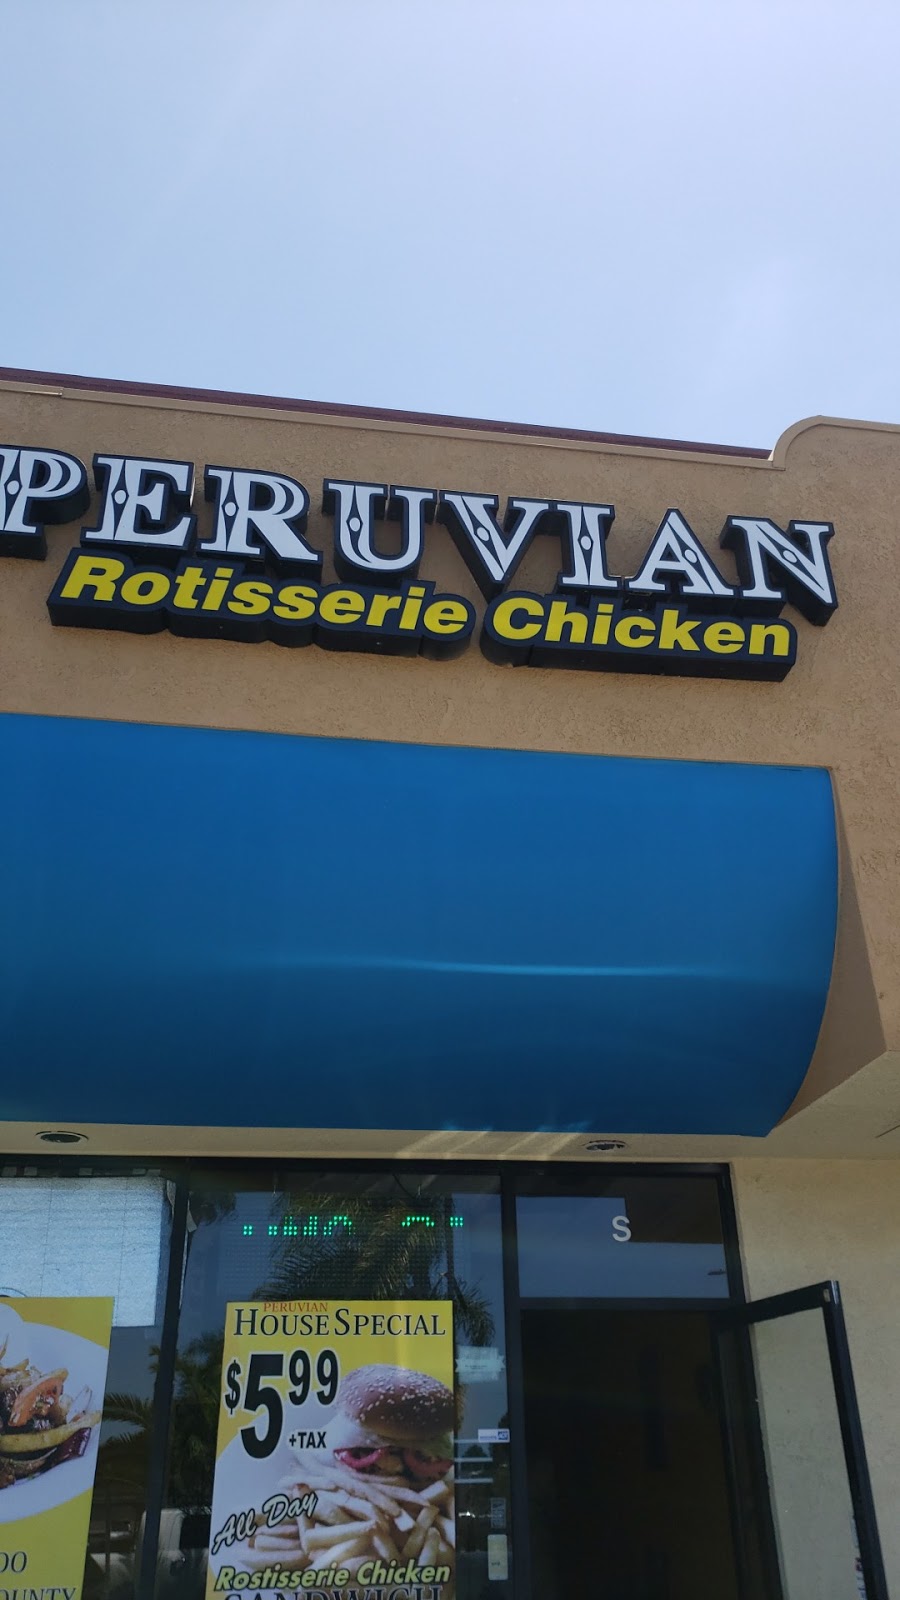 Peruvian Rotisserie Chicken | 19092 Beach Blvd, Huntington Beach, CA 92648 | Phone: (714) 593-4111